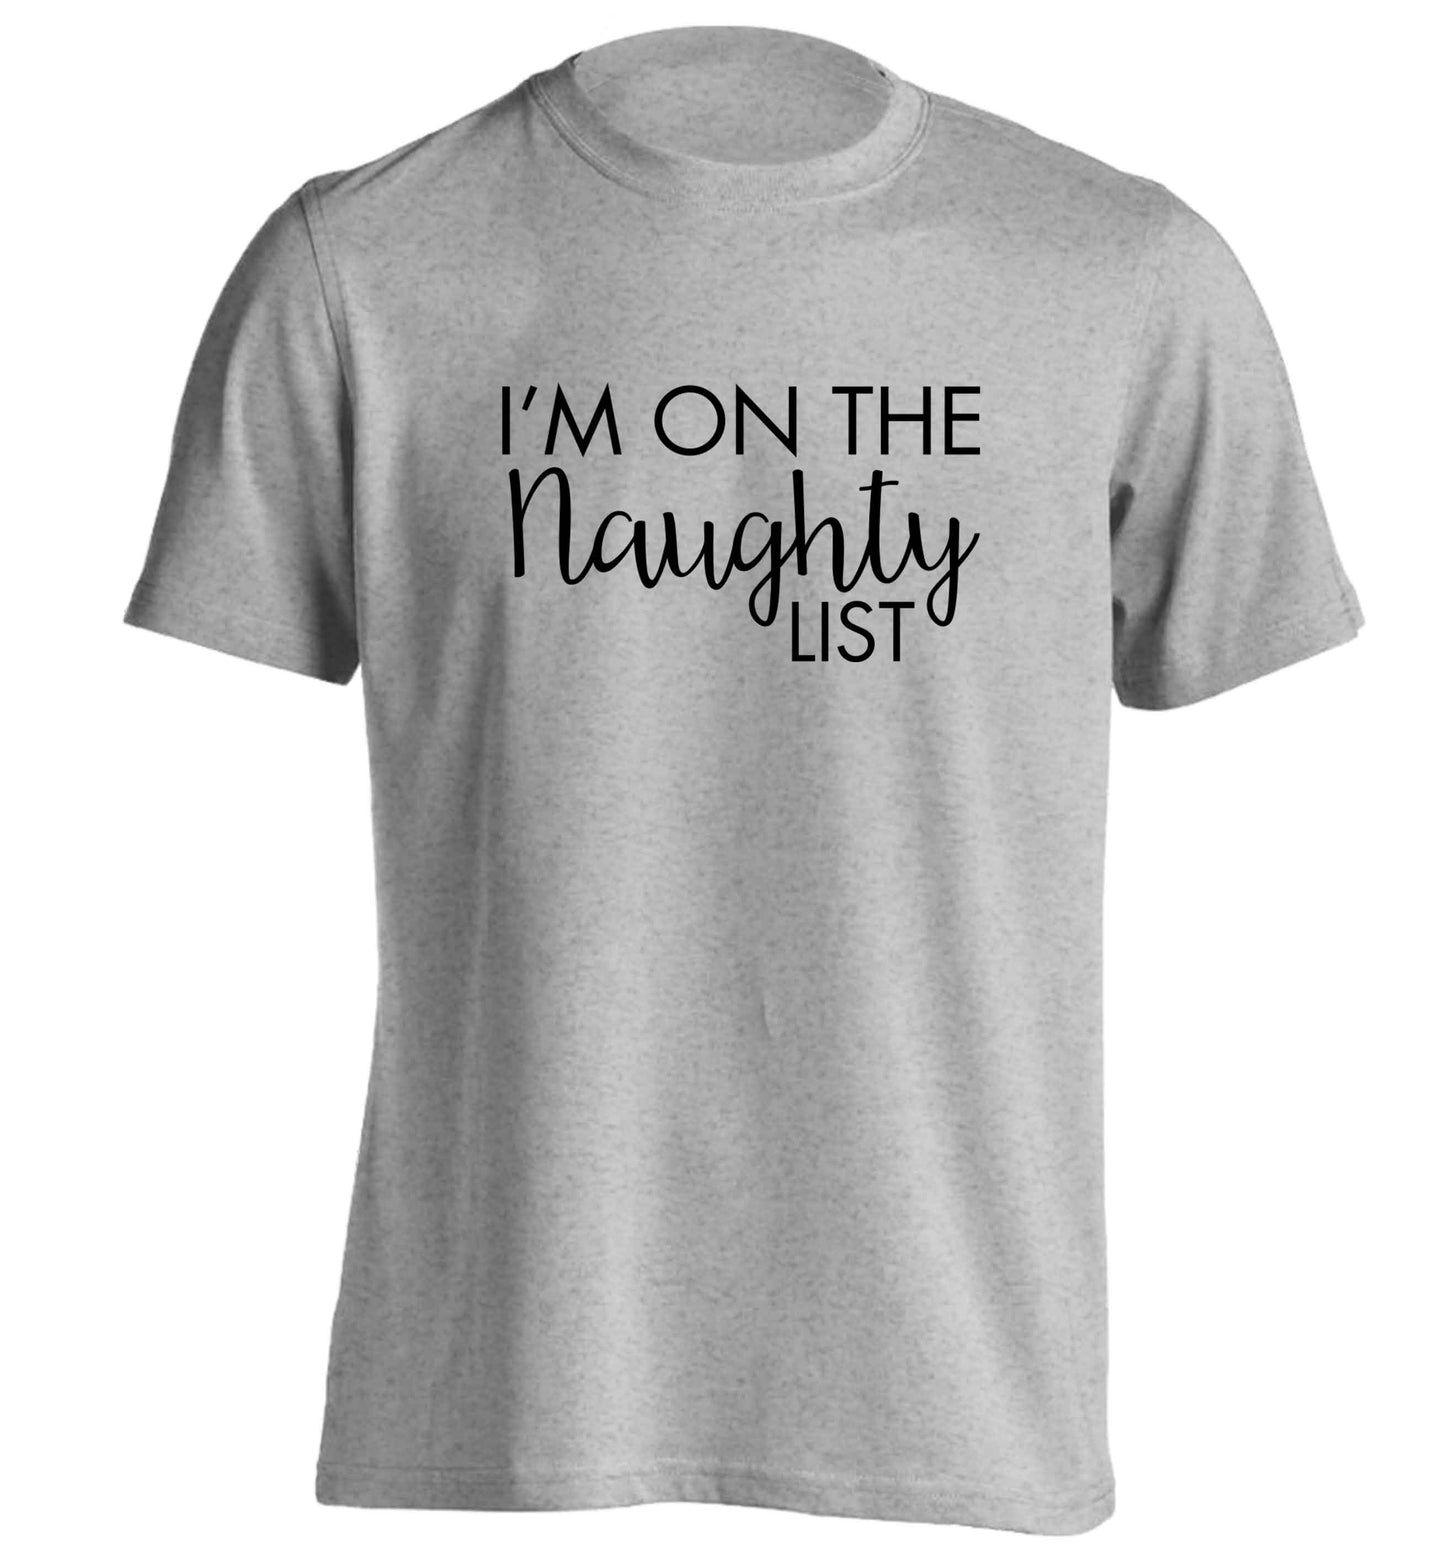 I'm on the naughty list adults unisex grey Tshirt 2XL